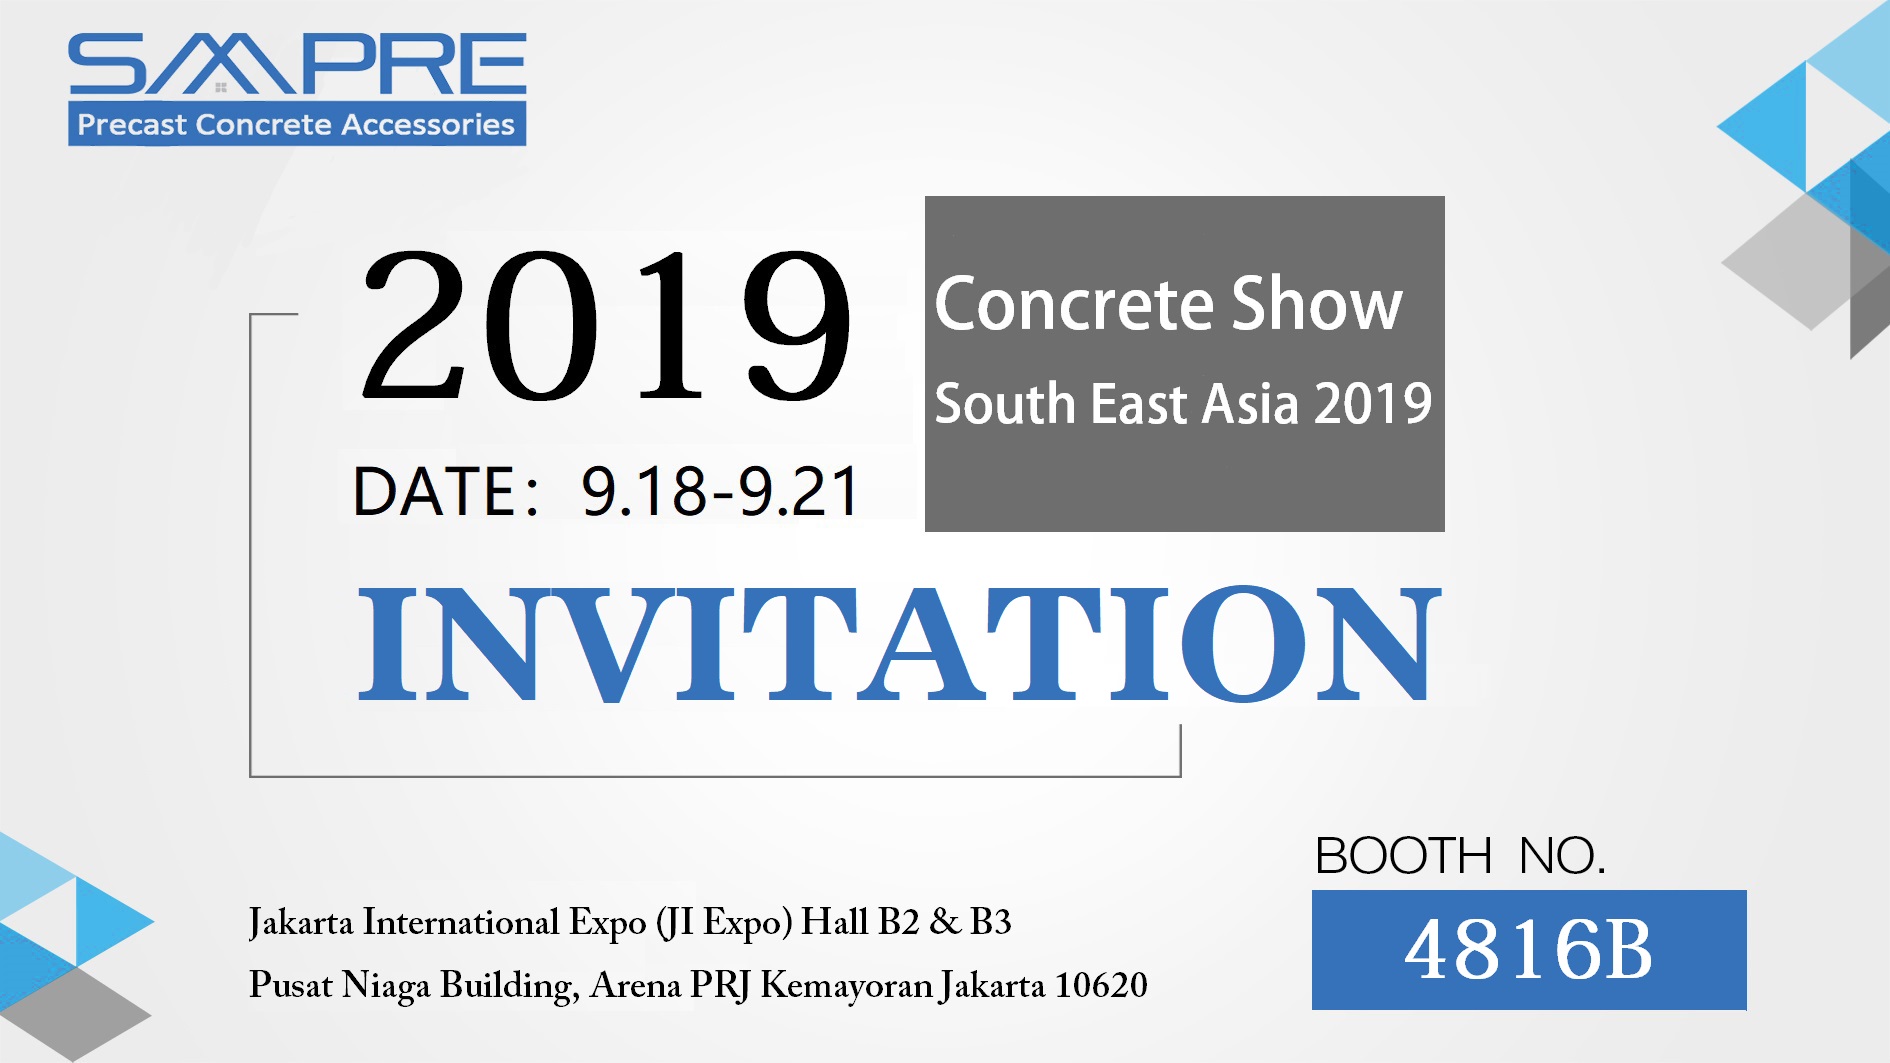 Concrete Show South East Asia 2019